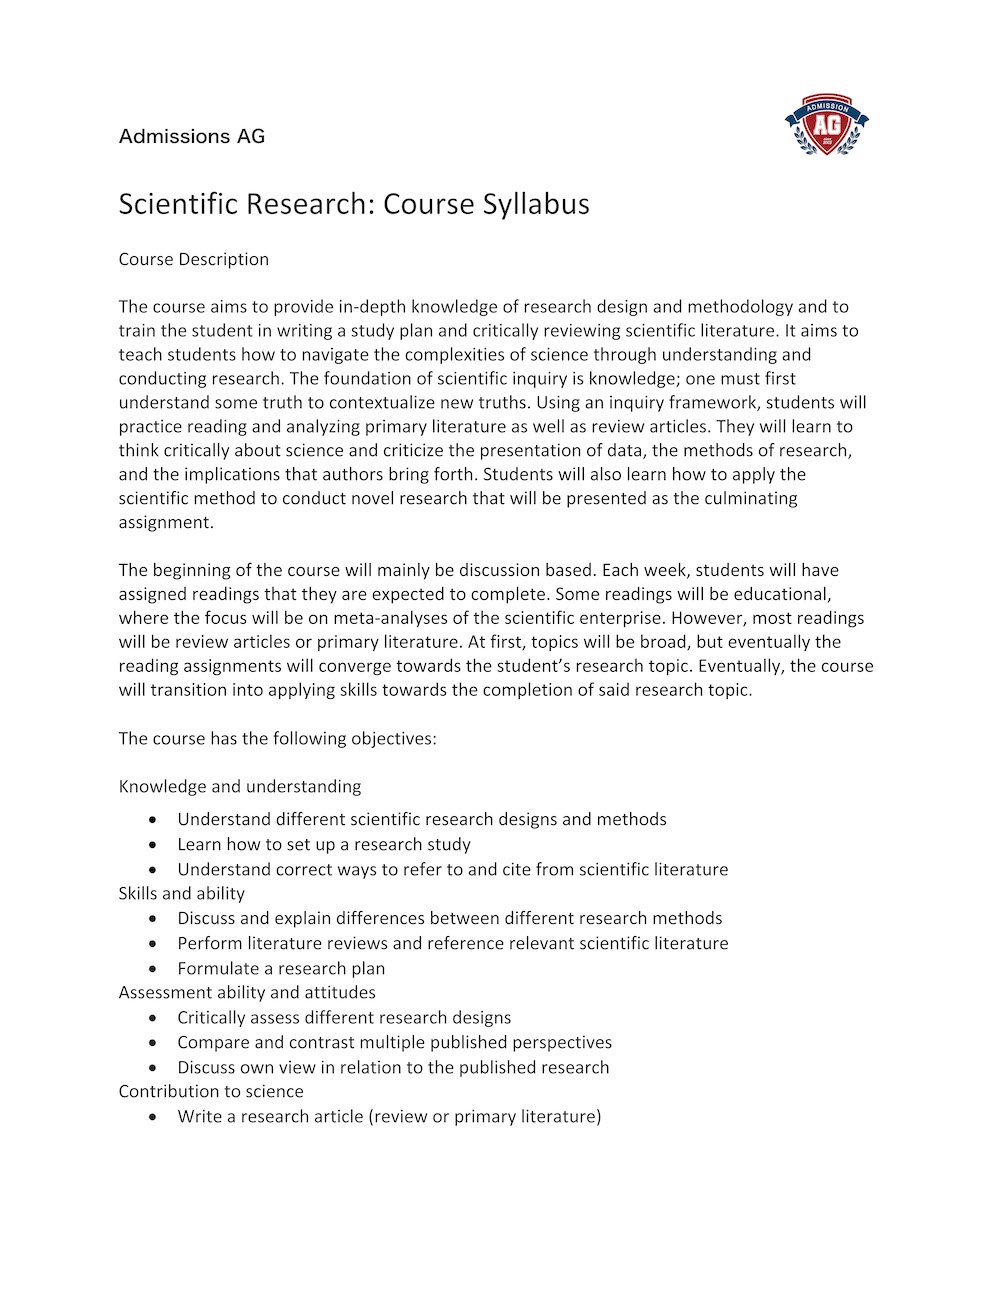 Scientific Research Syllabus[39]_Page_1.jpg